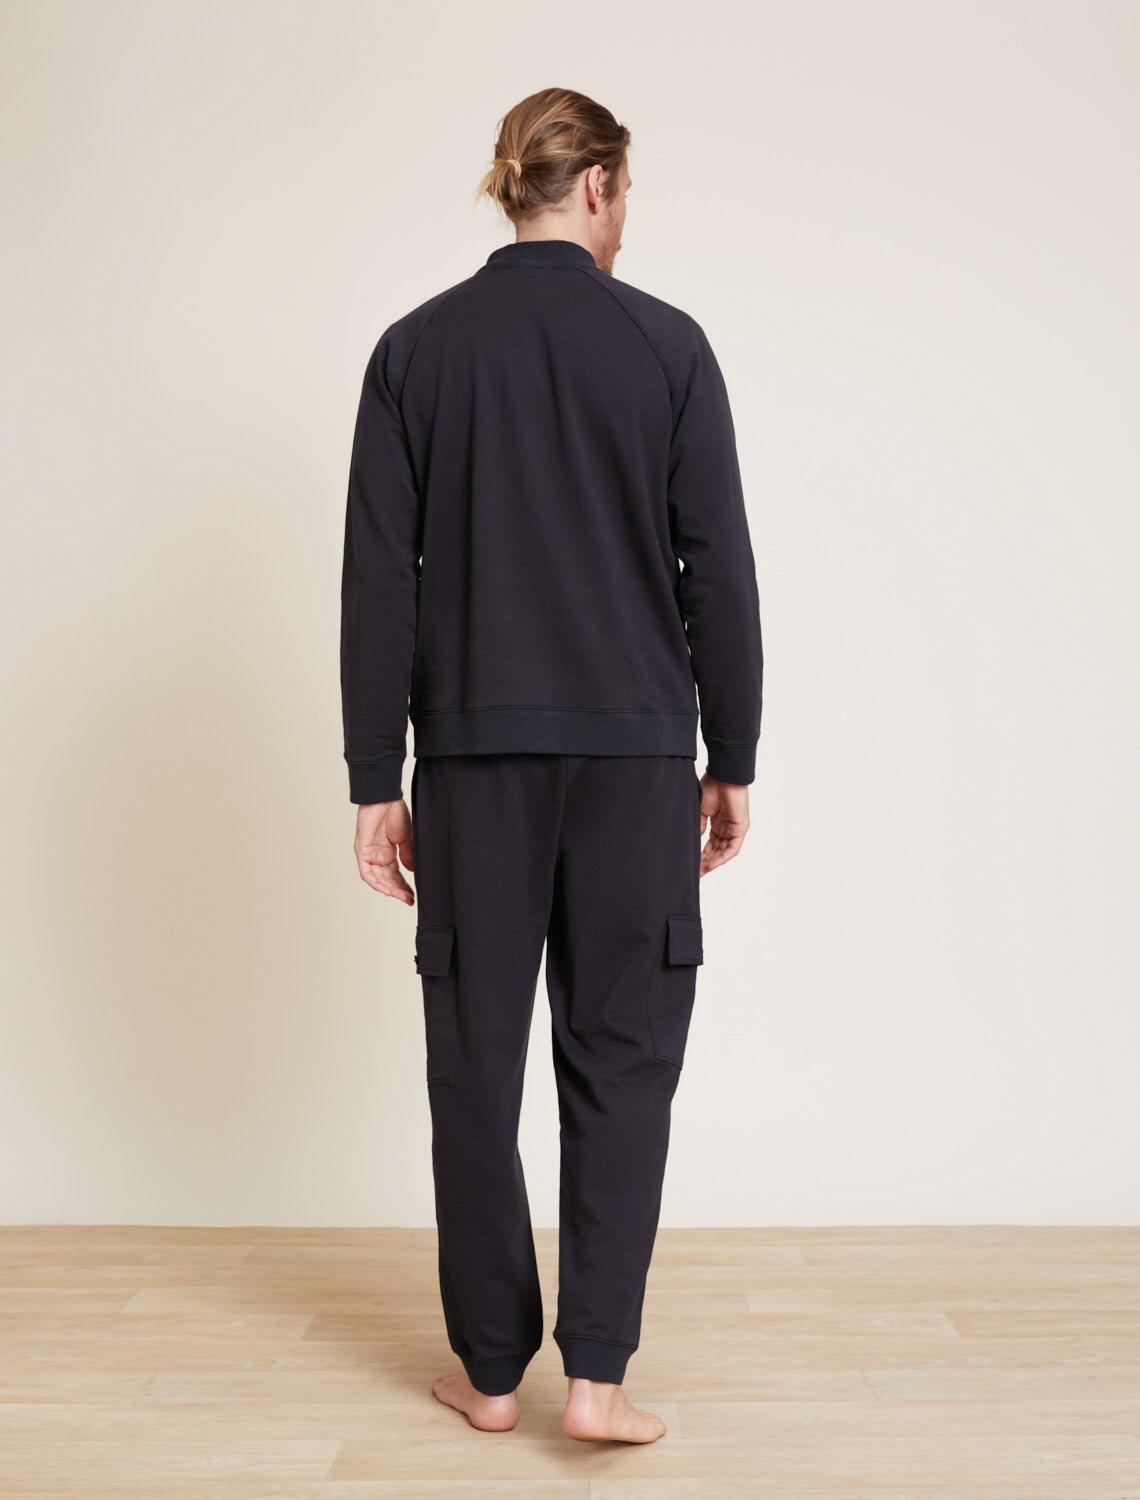 Malibu Collection® Men's Pima Cotton Fleece Half Zip Pullover